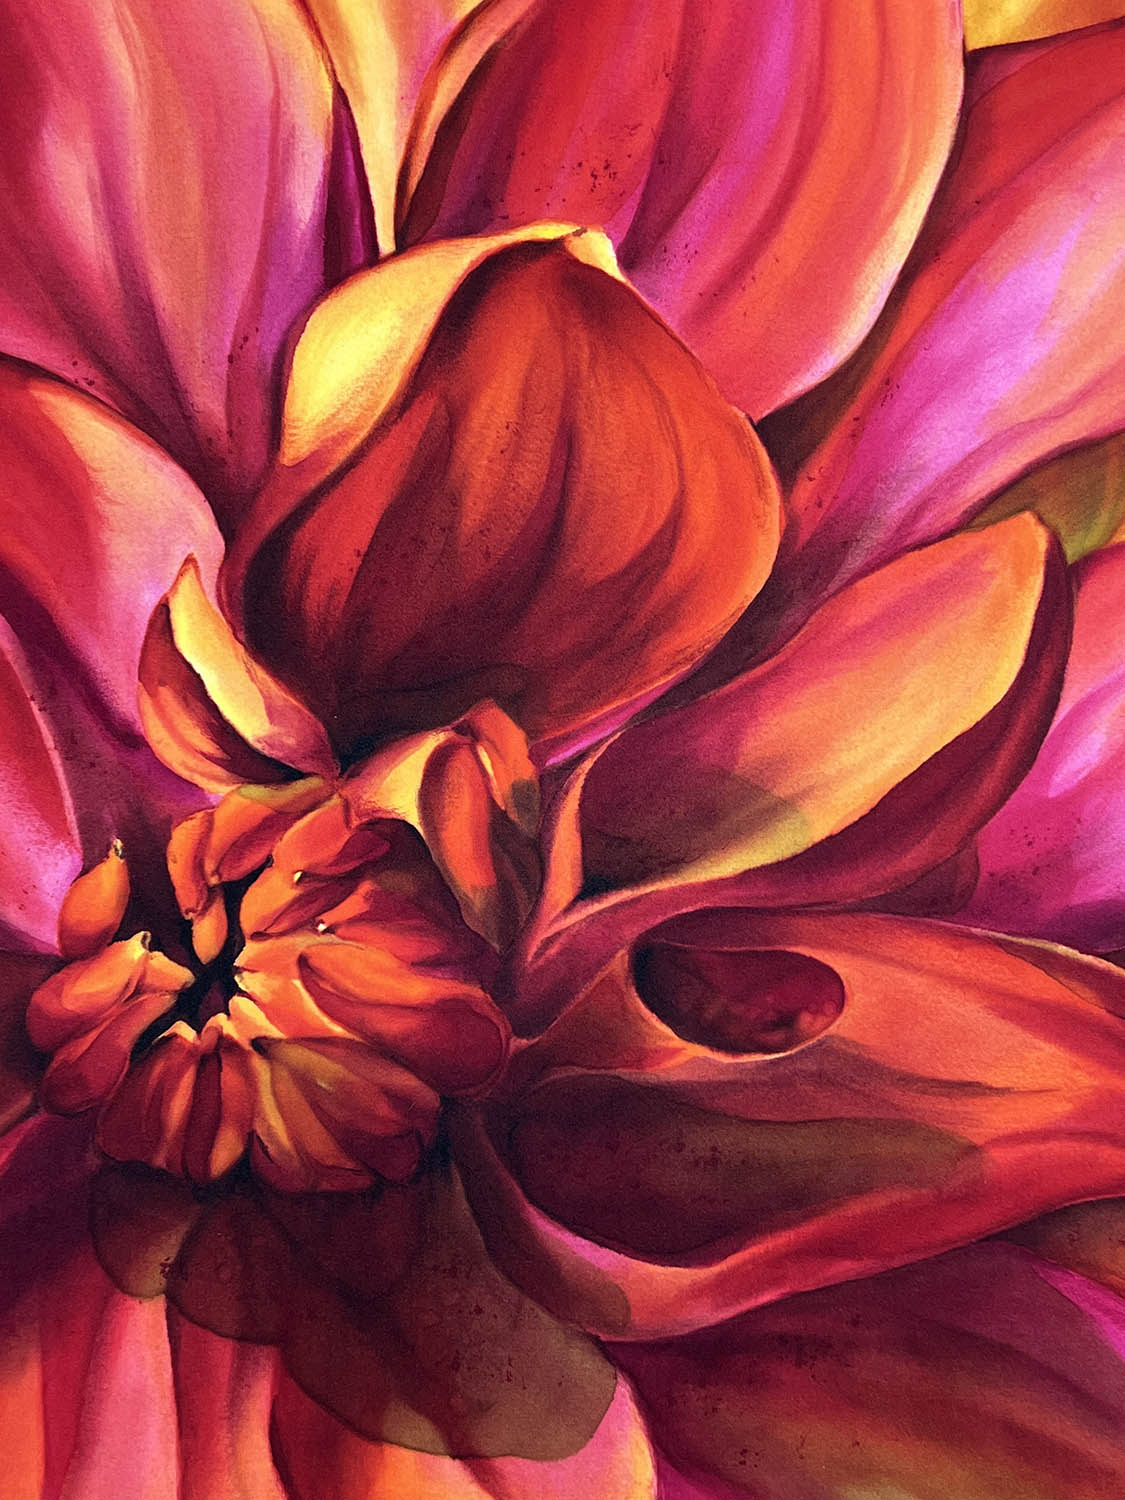 openingUp flower